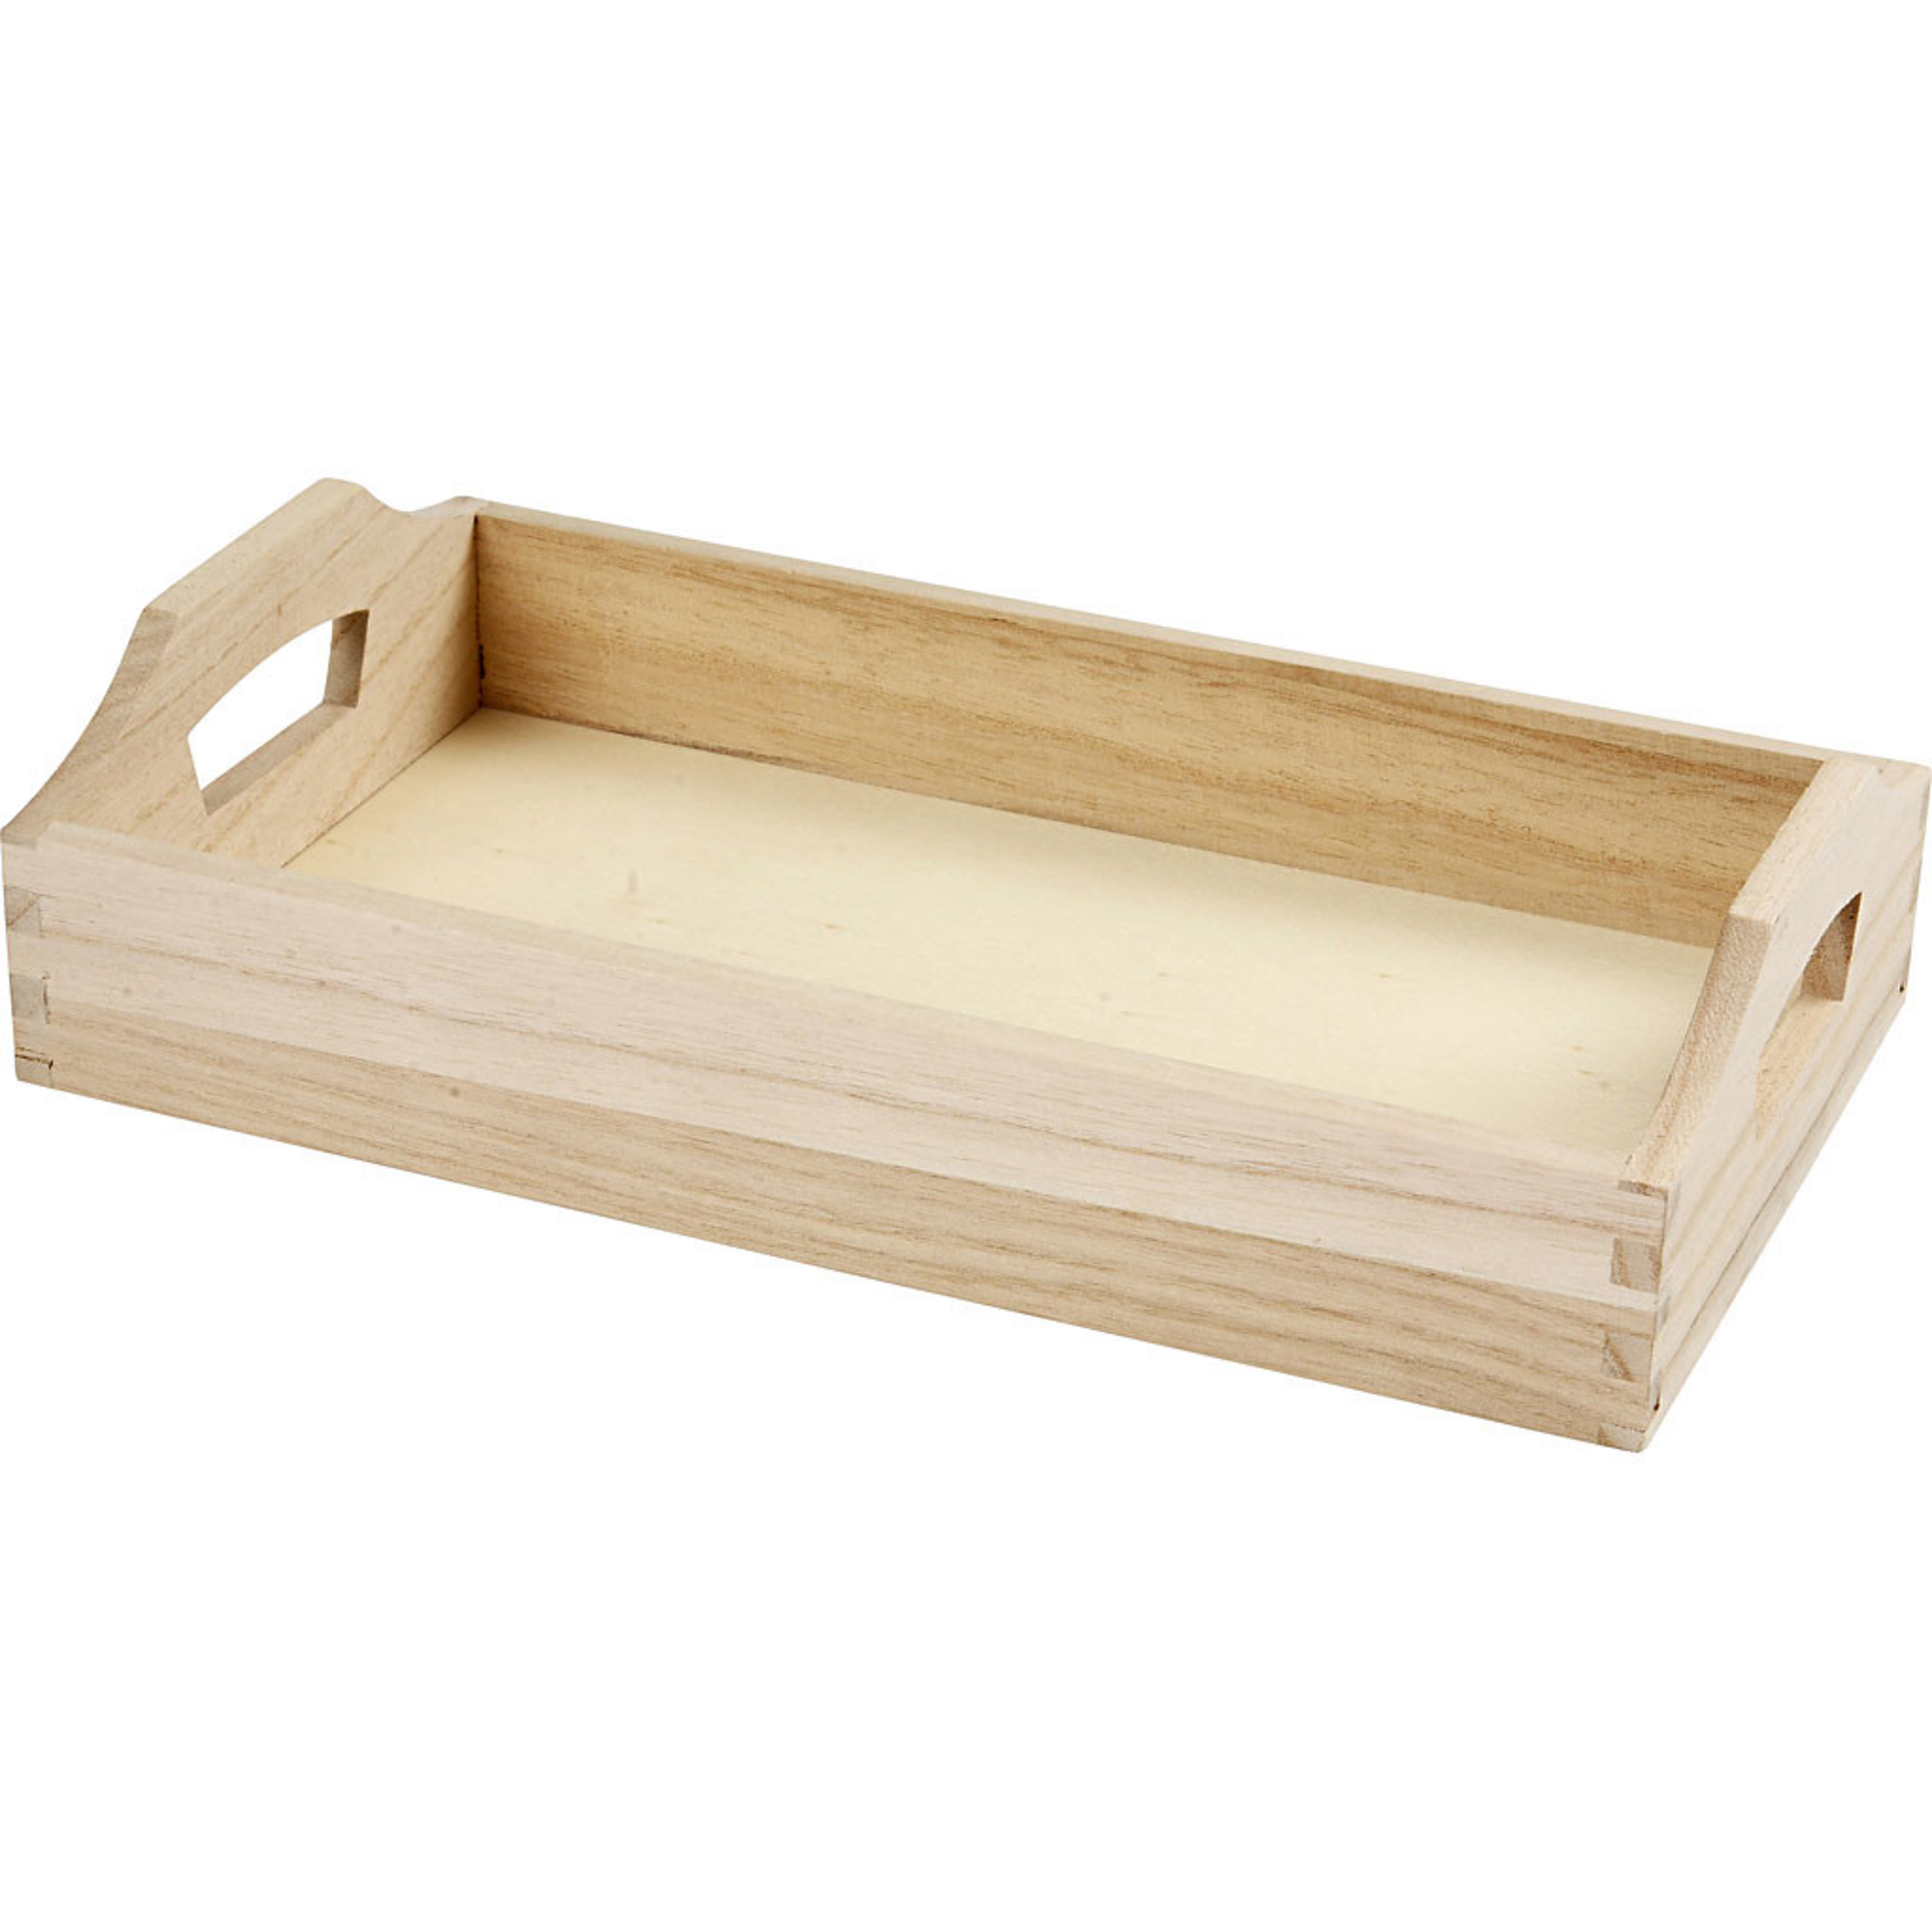 Wooden Tray 30 X 17 X 5cm